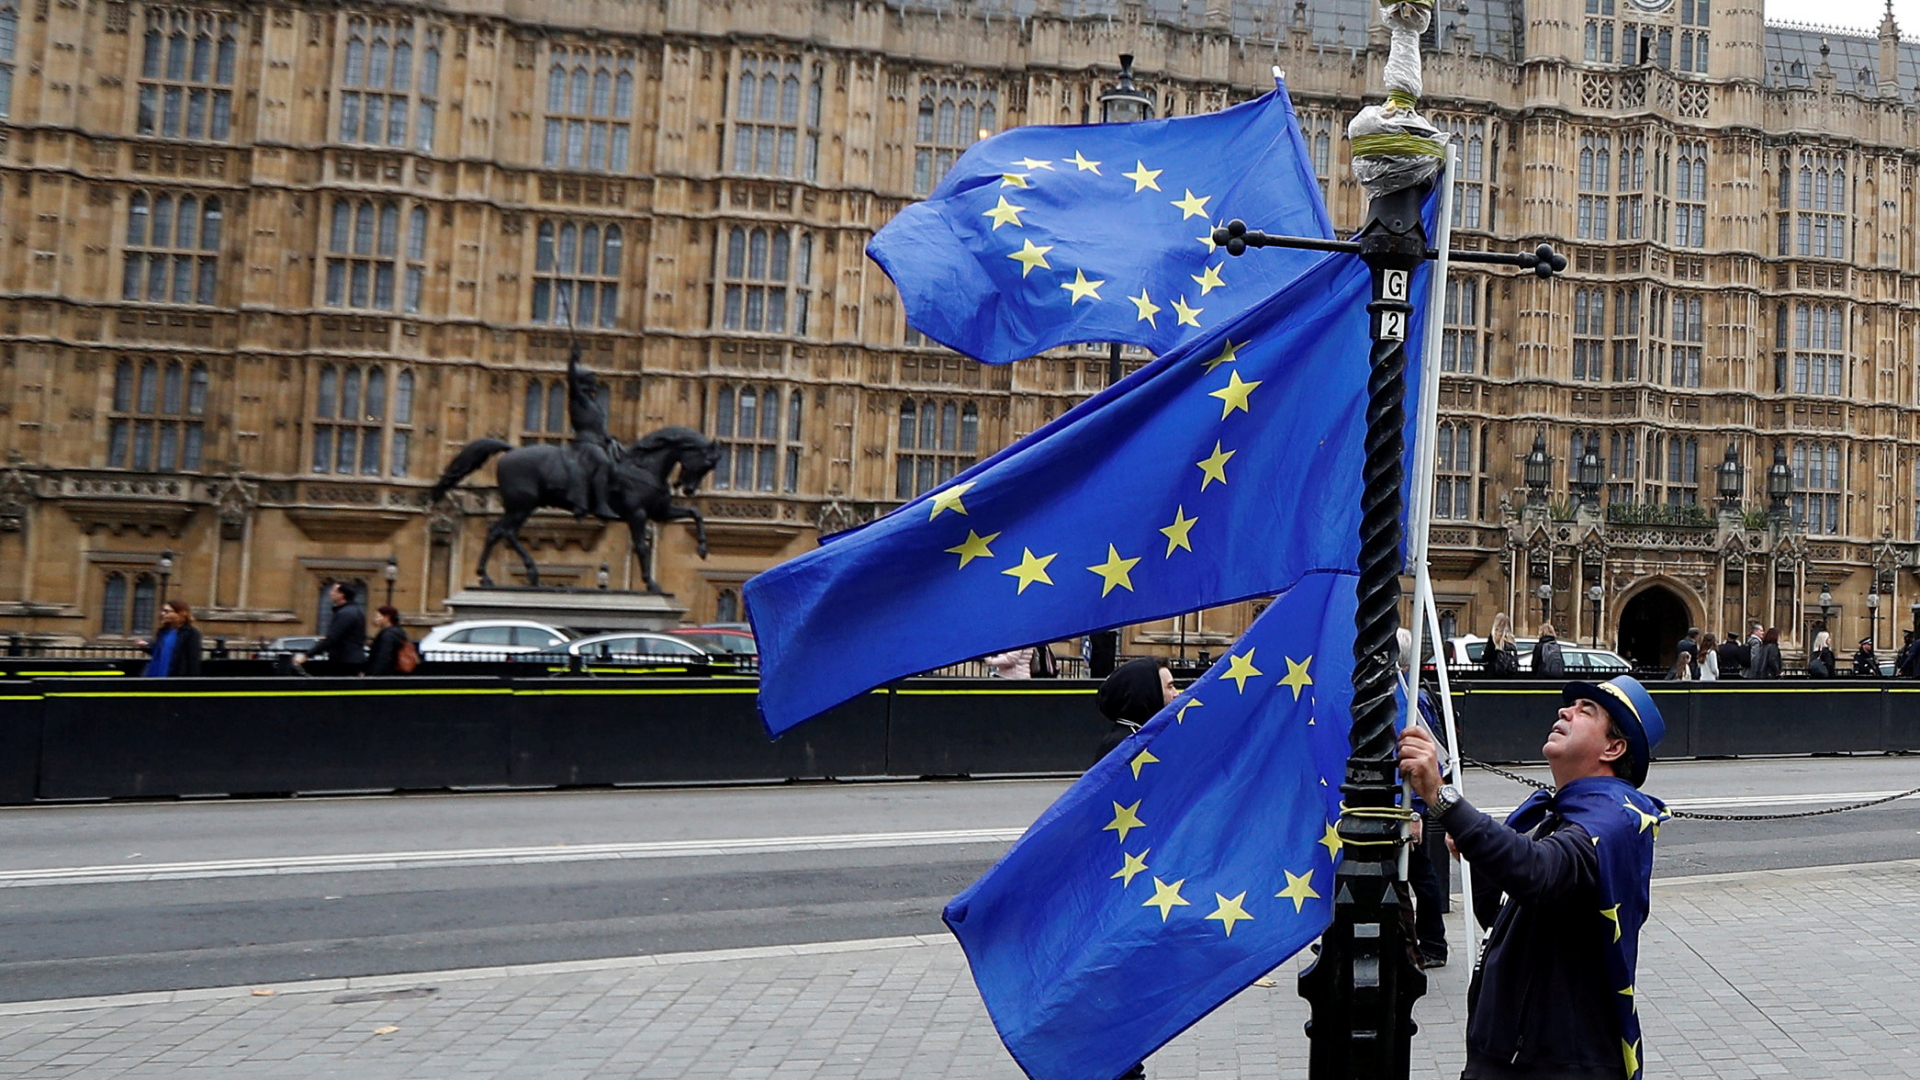 Mann mit EU-Flaggen in London | REUTERS